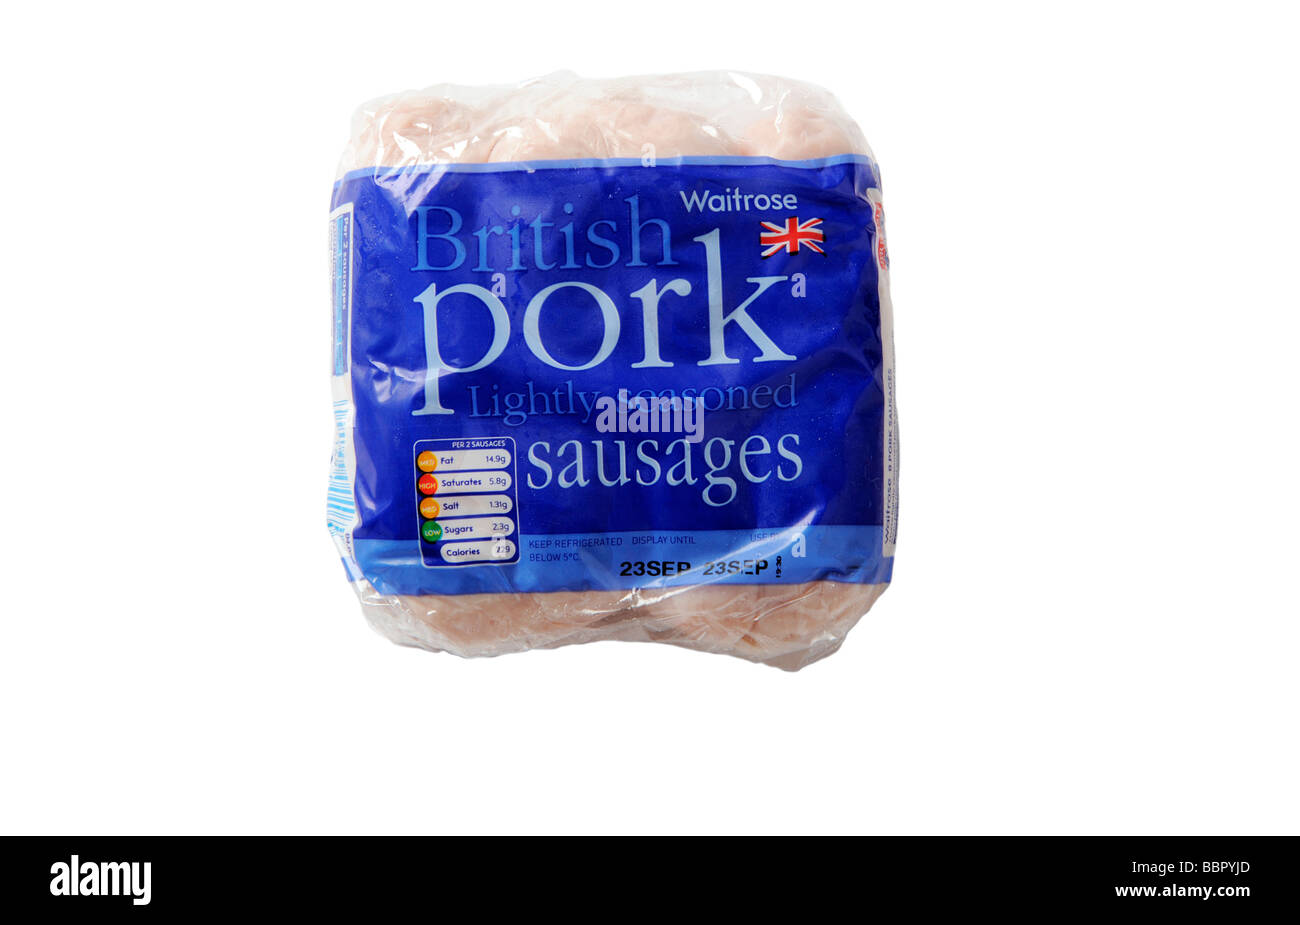 British portksausages from Waitrose supermarket Stock Photo